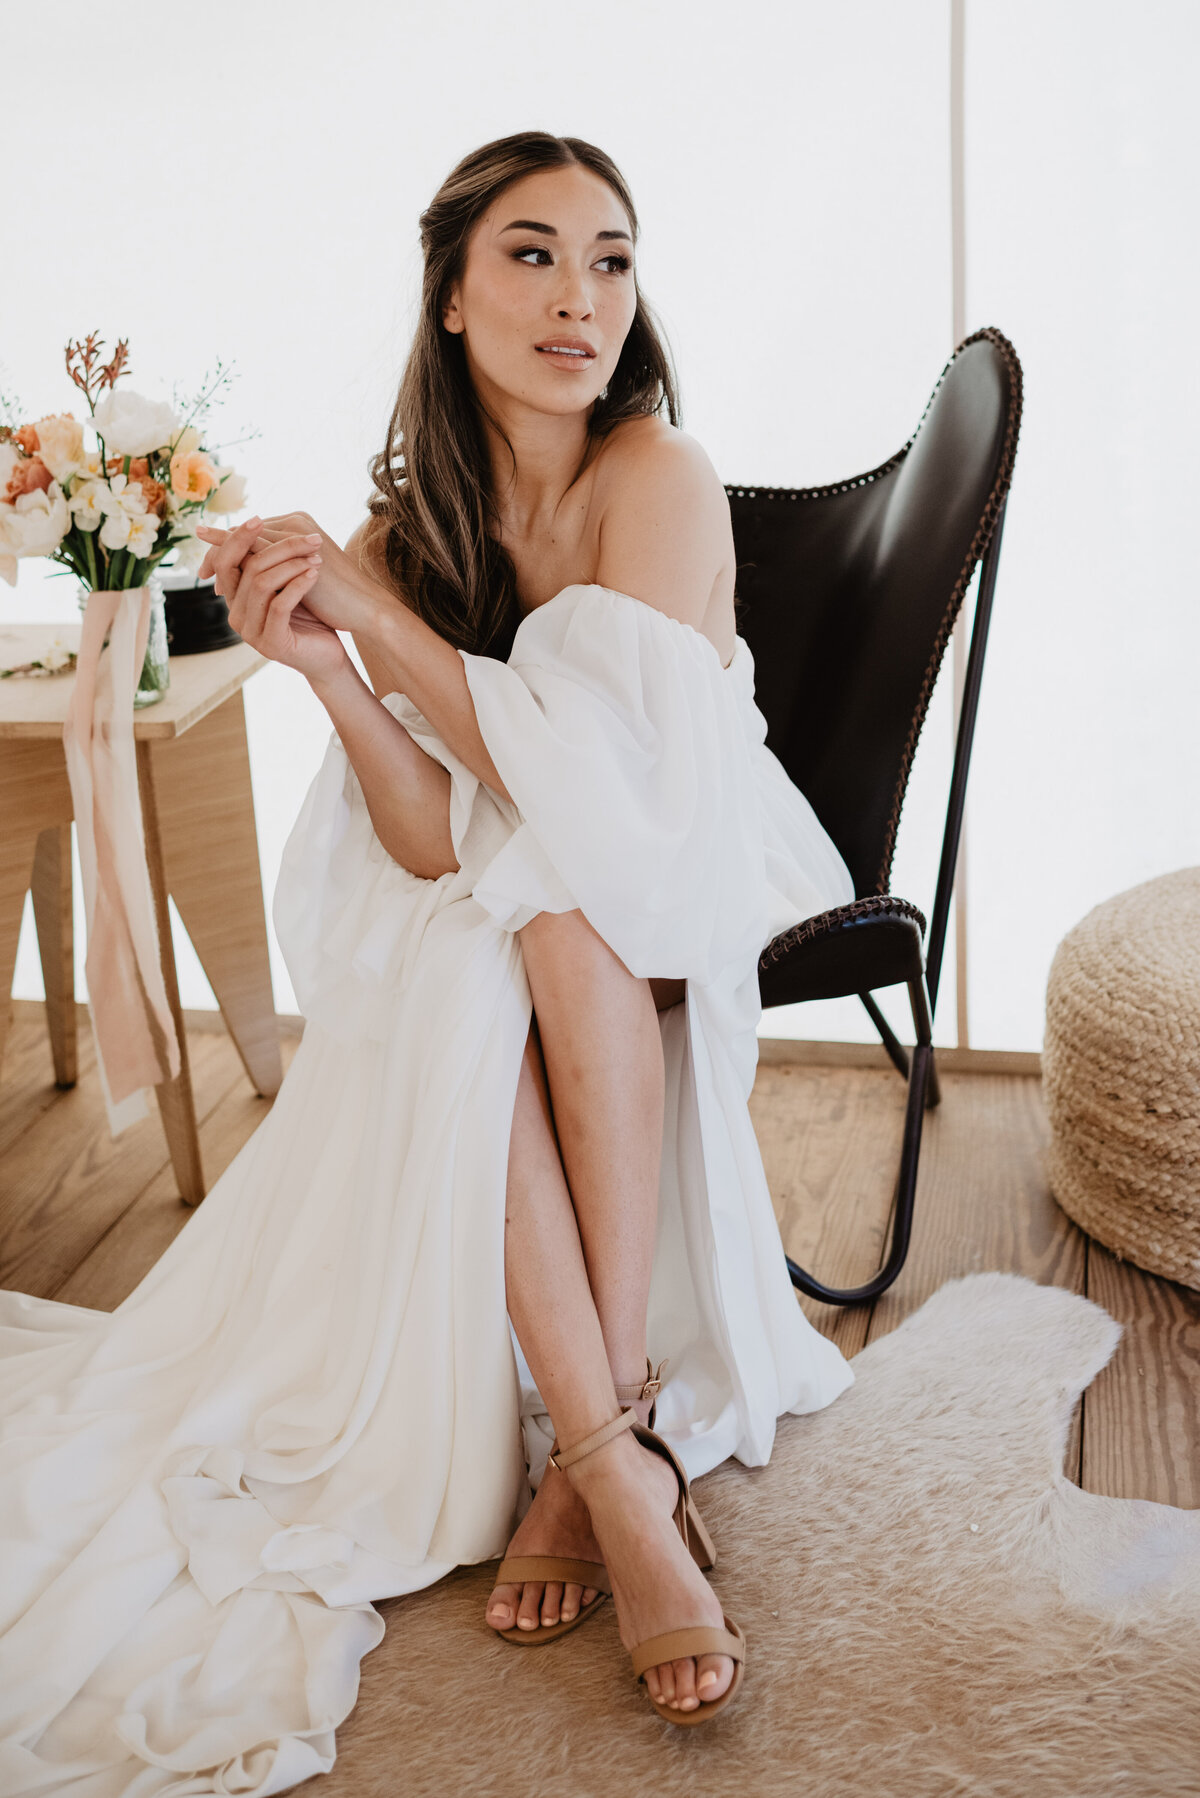 Utah Elopement Photographer captures woman wearing wedding dress